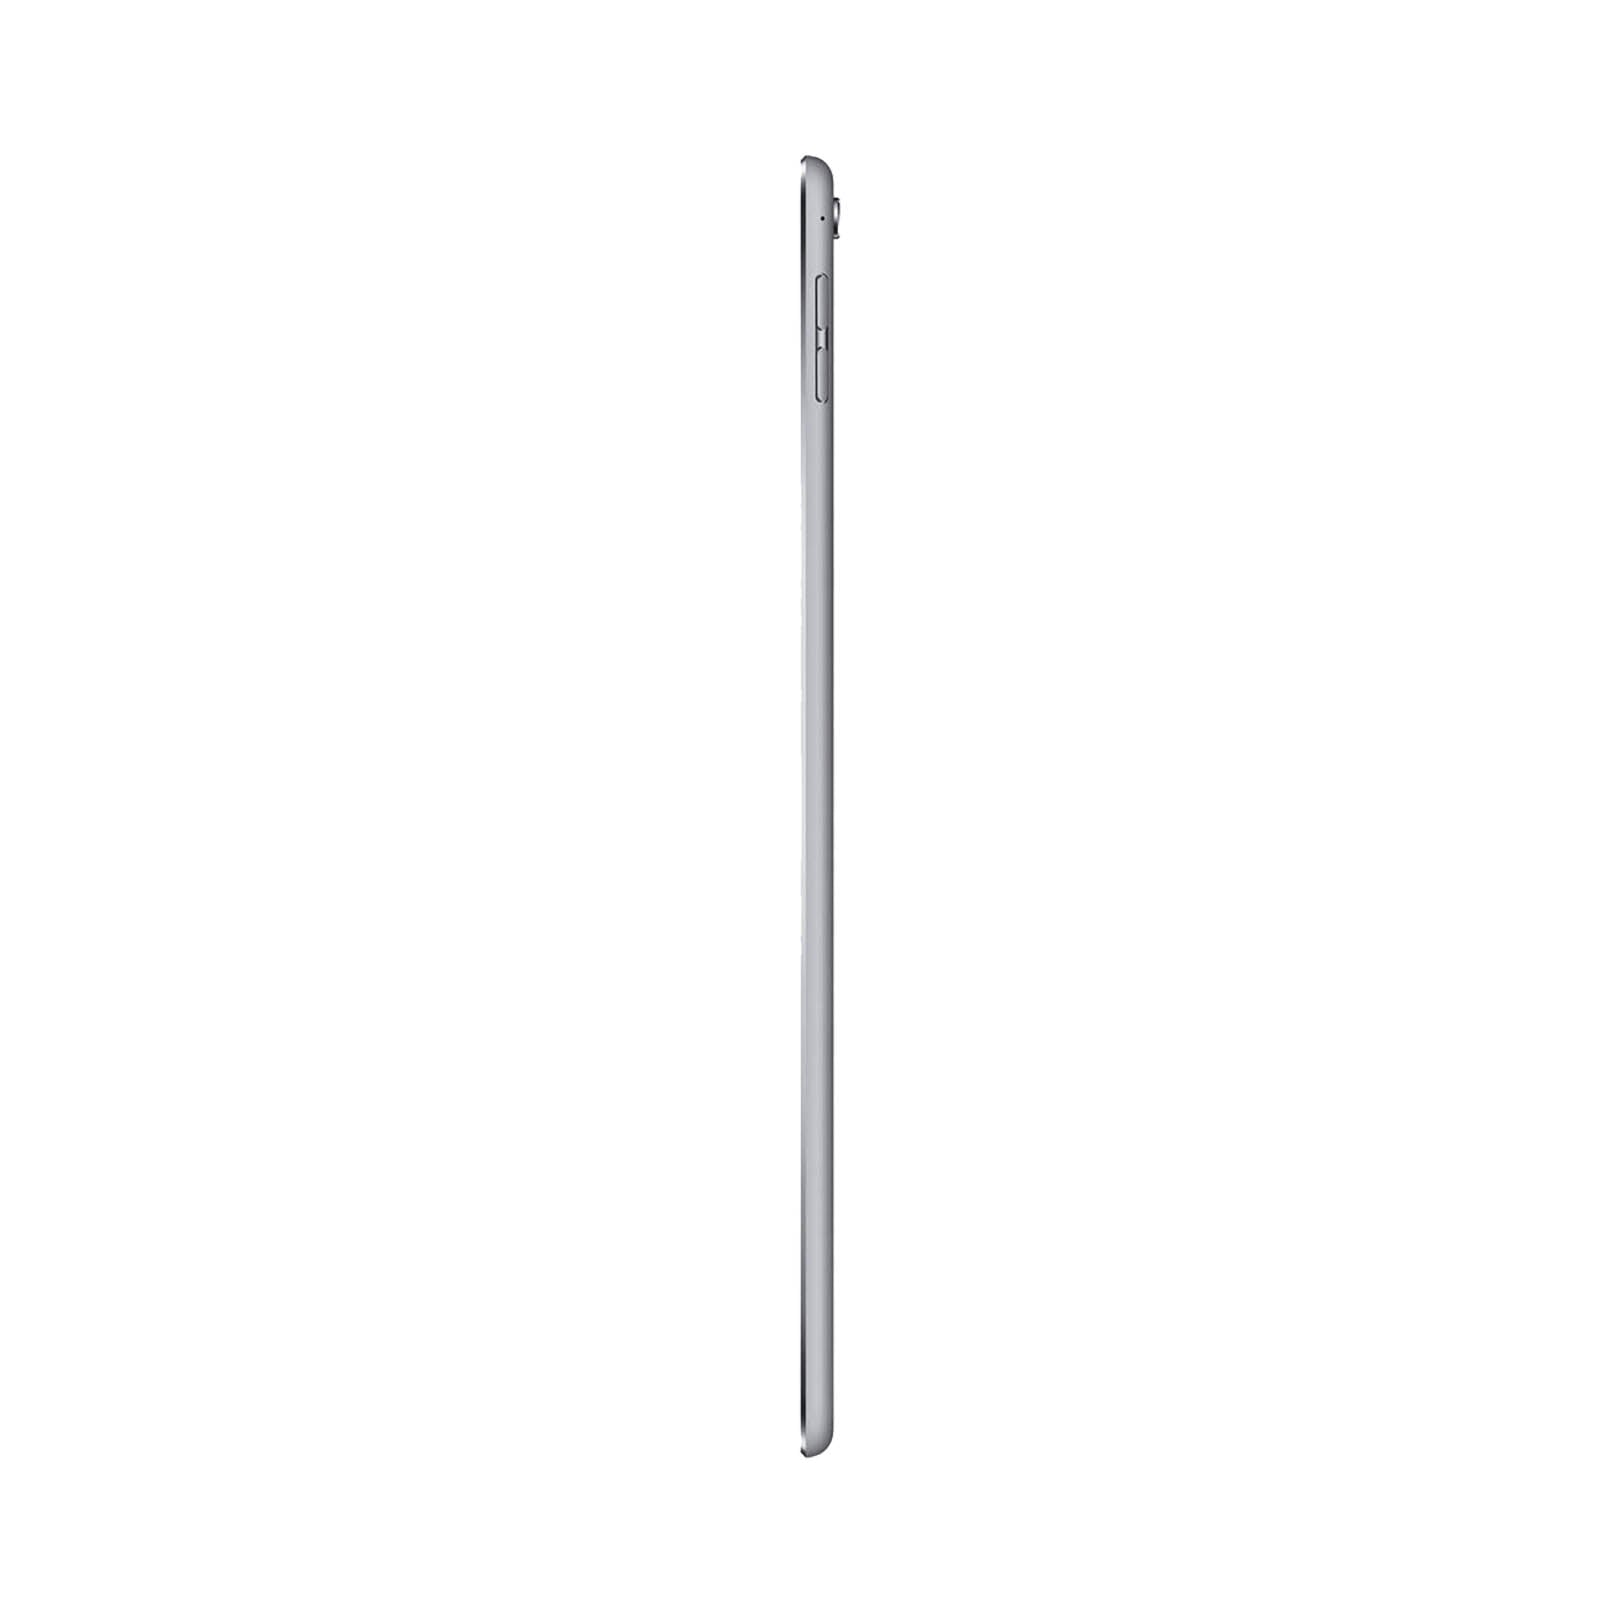 iPad Pro 9.7 Inch 128GB Space Grey Very Good - WiFi